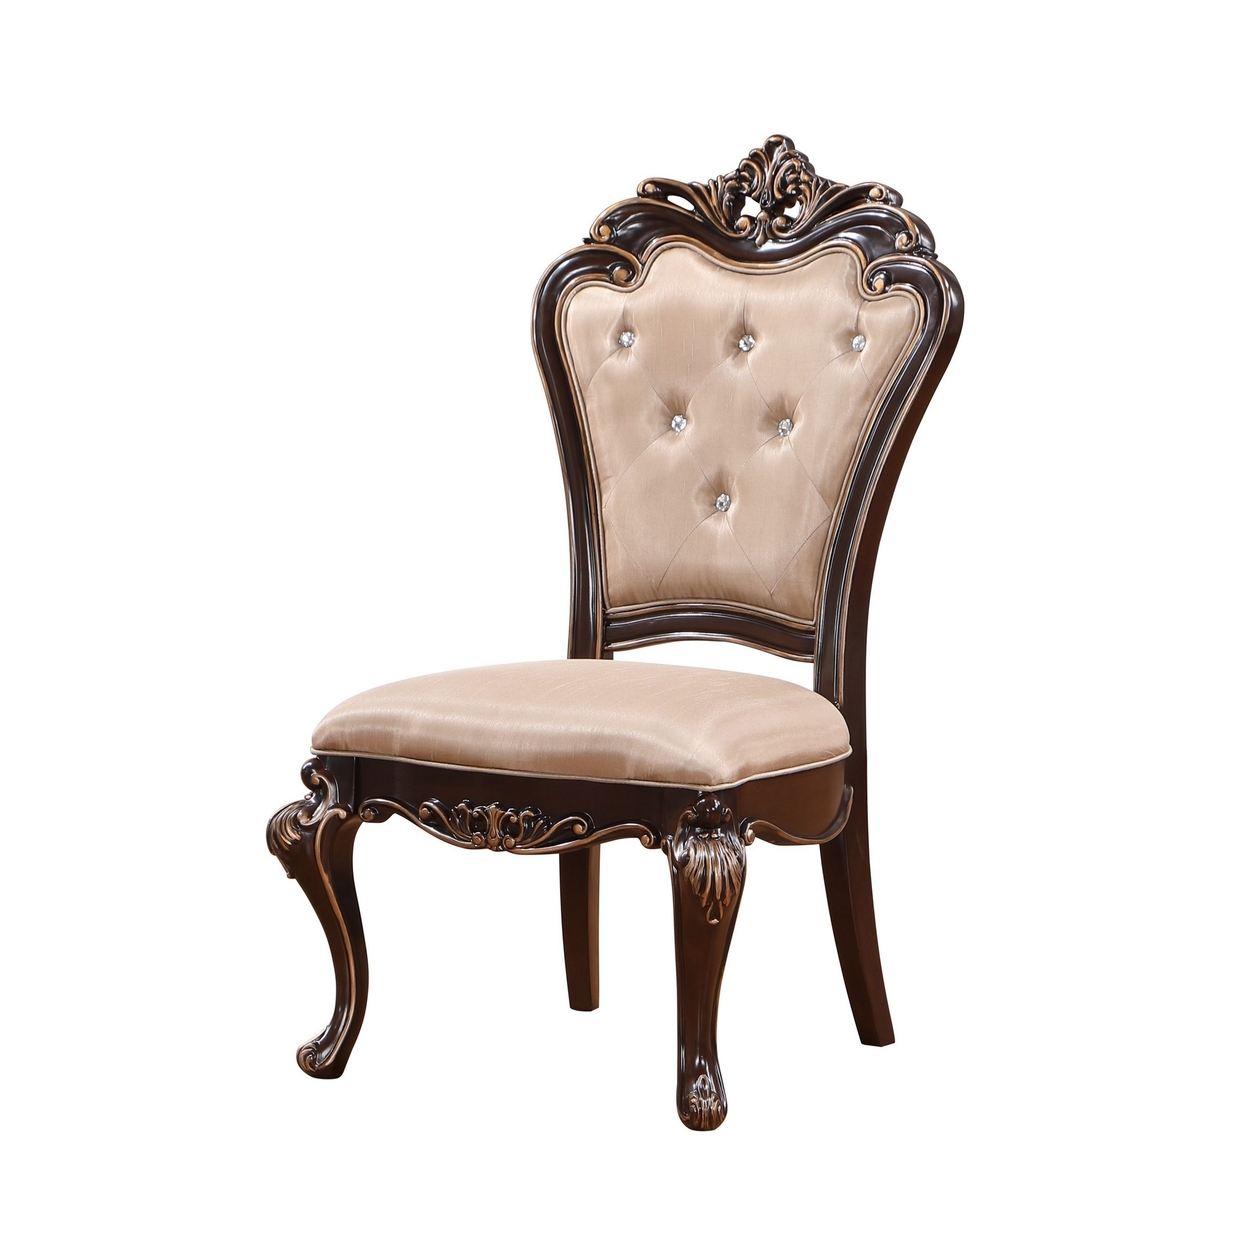 Leon 22 Inch Set Of 2 Tufted Dining Chairs, Cherry Brown Wood, Beige Fabric - Saltoro Sherpi